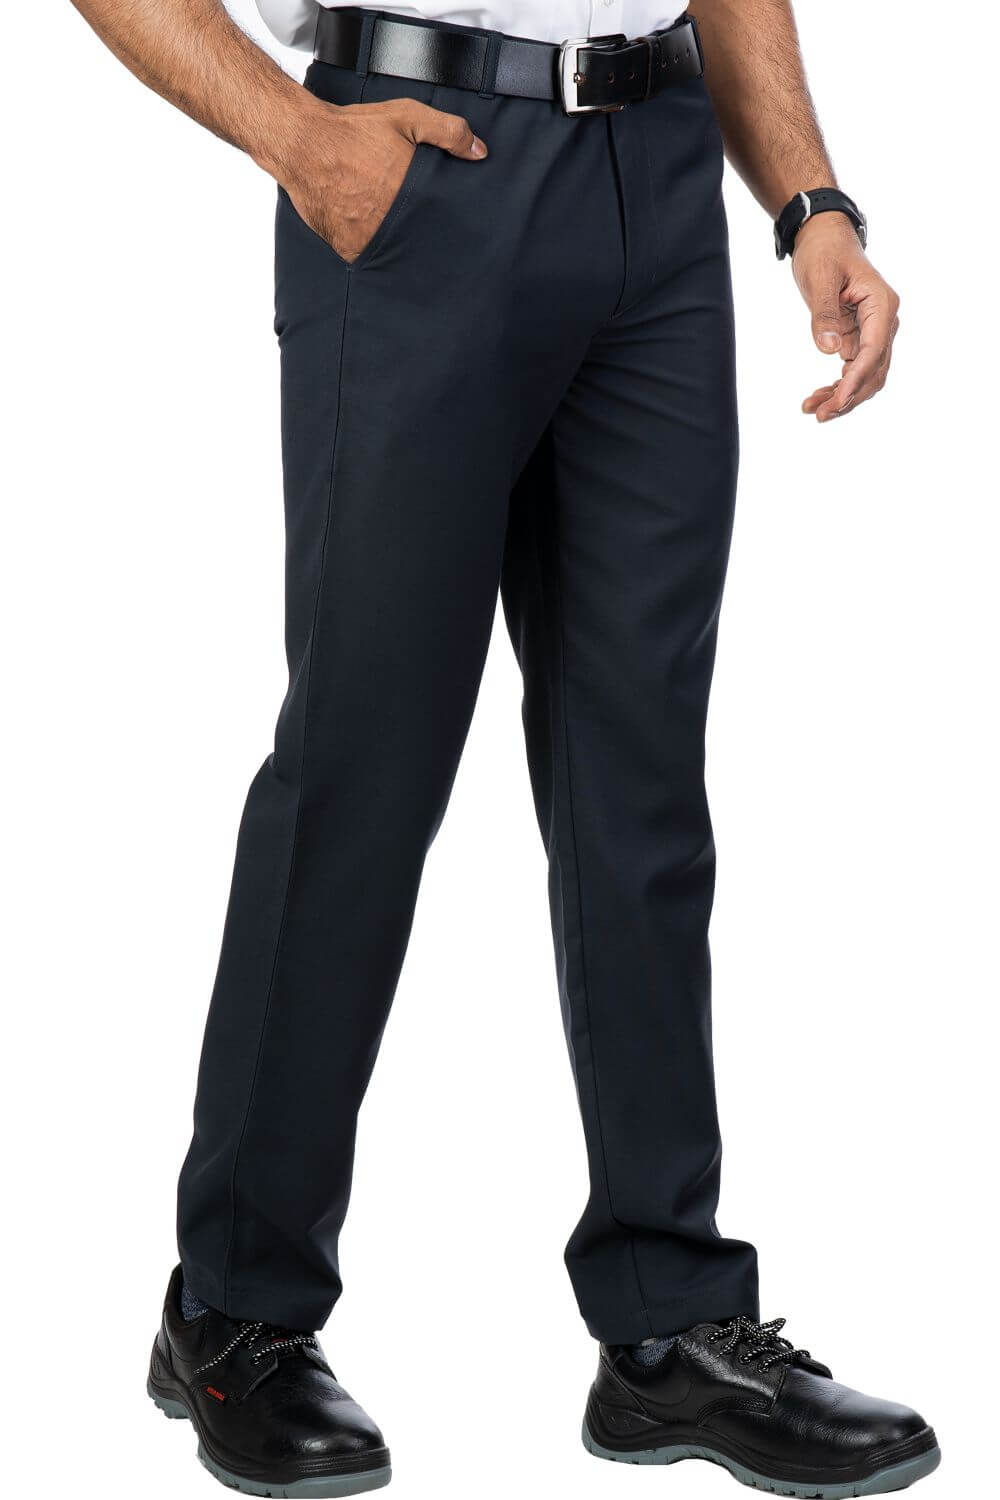 Regular comfort fit With Ergonomic design Grey Formal Trouser